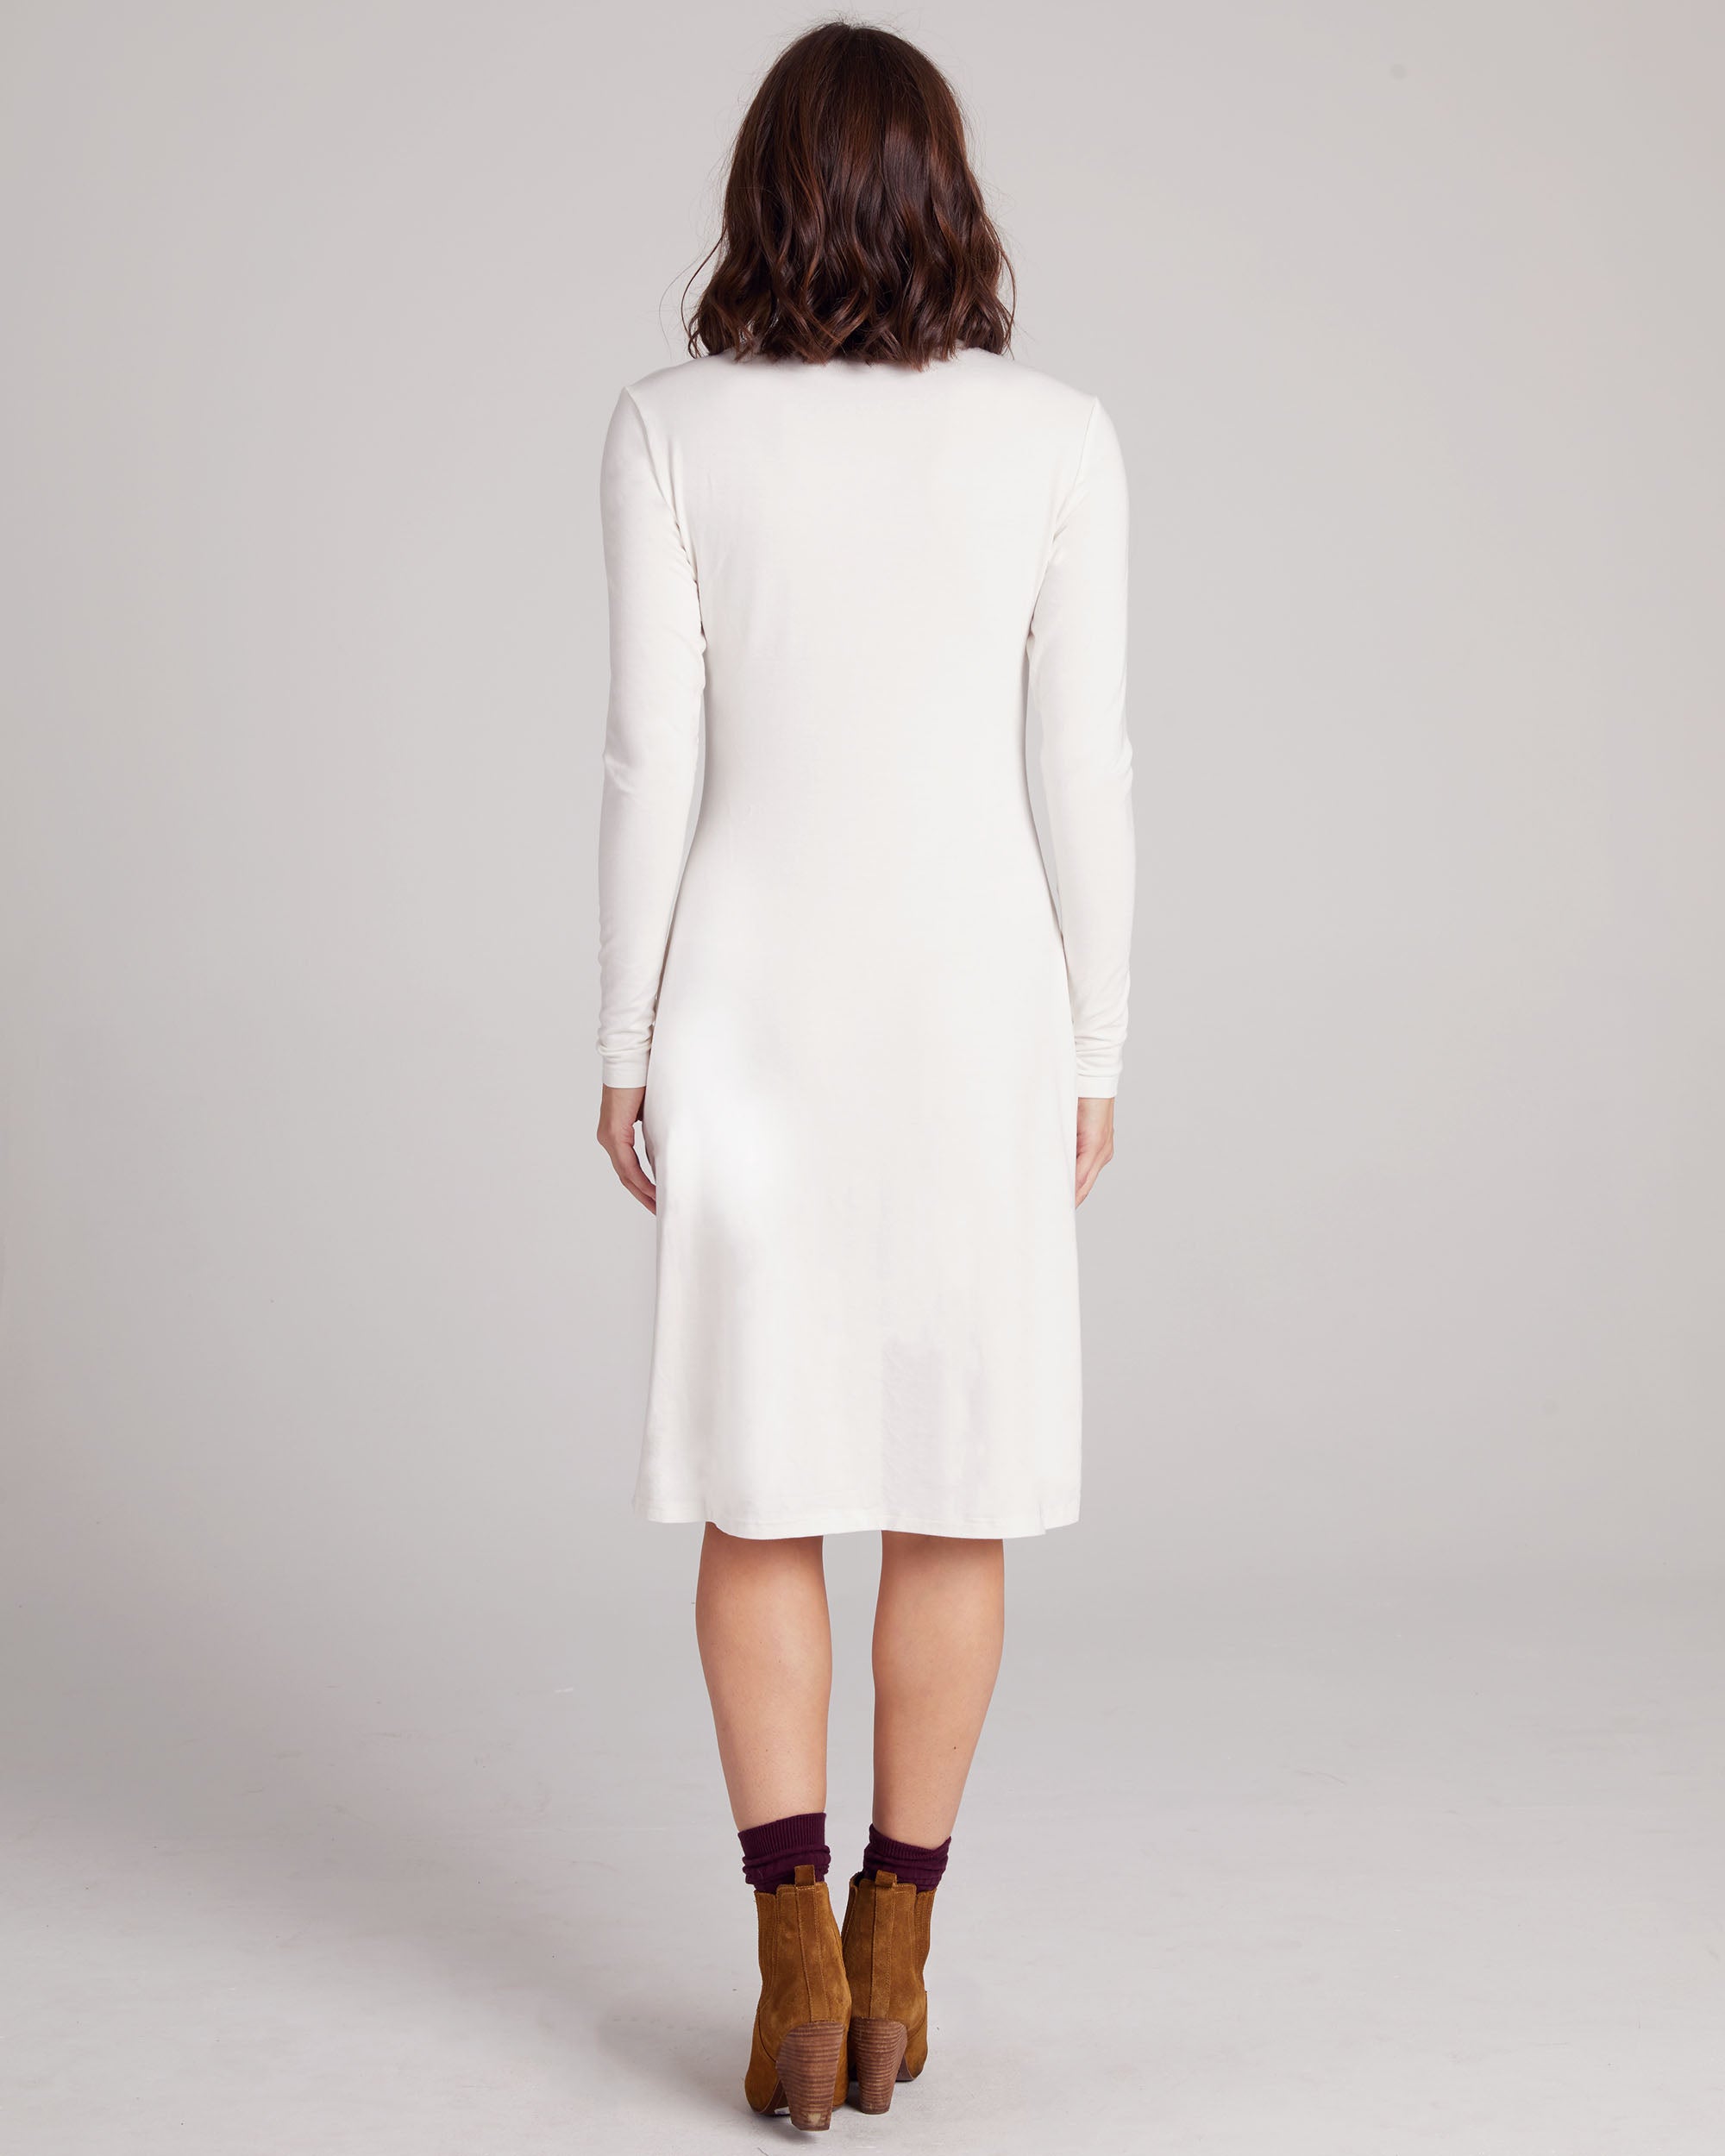 Eterne Long Sleeve Turtleneck Mini Dress, Butter Soft Ribbed Cotton, Form Fitting, Grey, L